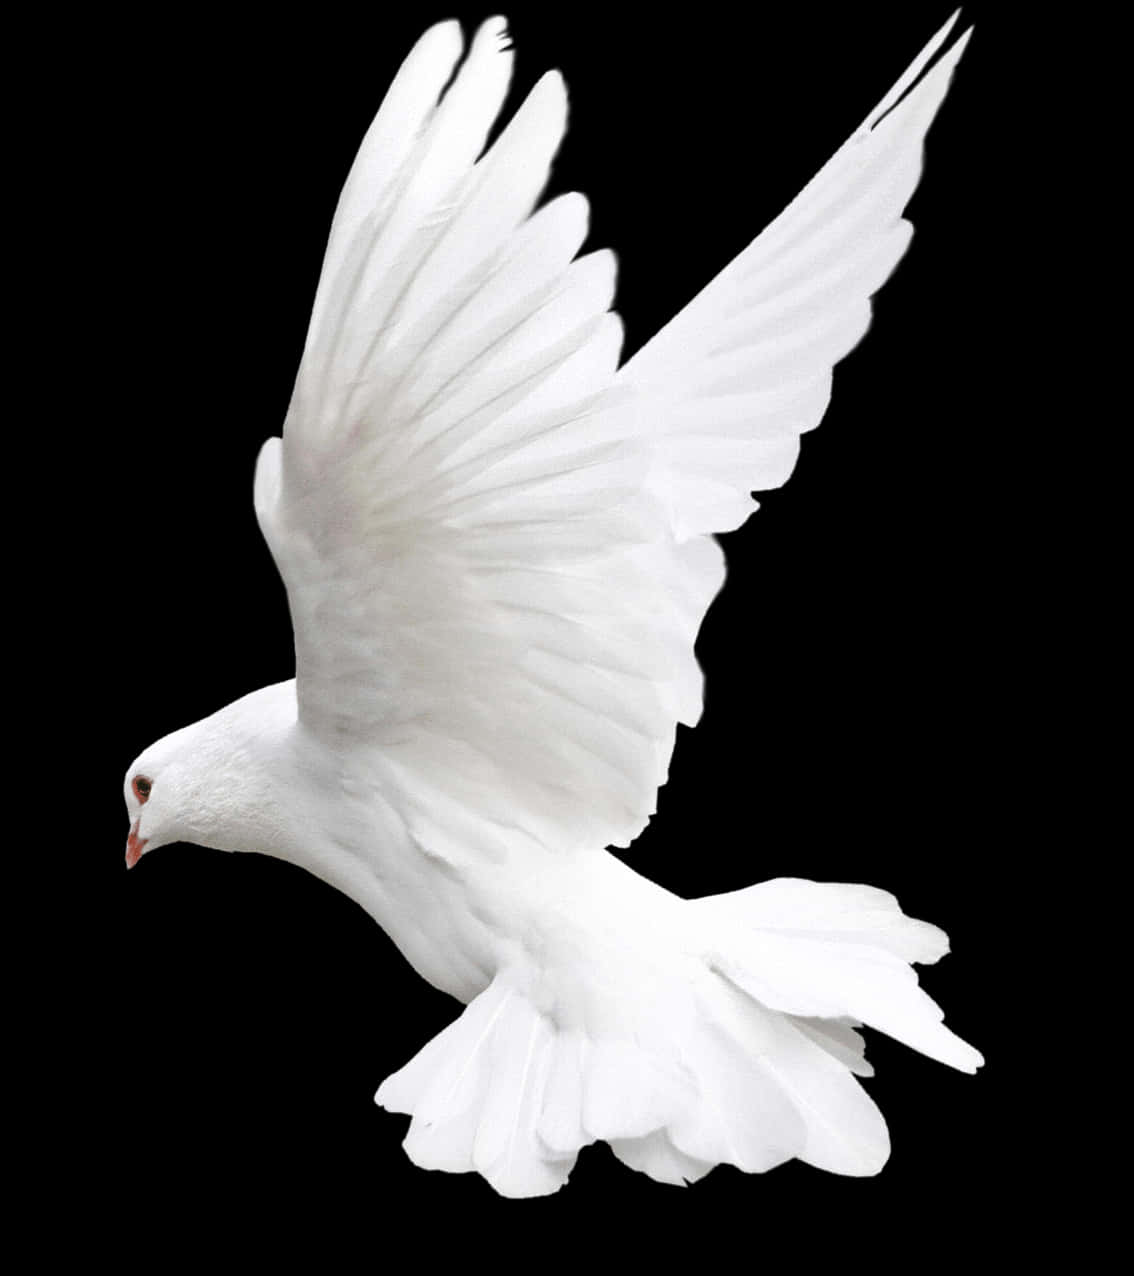 Majestic White Pigeon In Flight